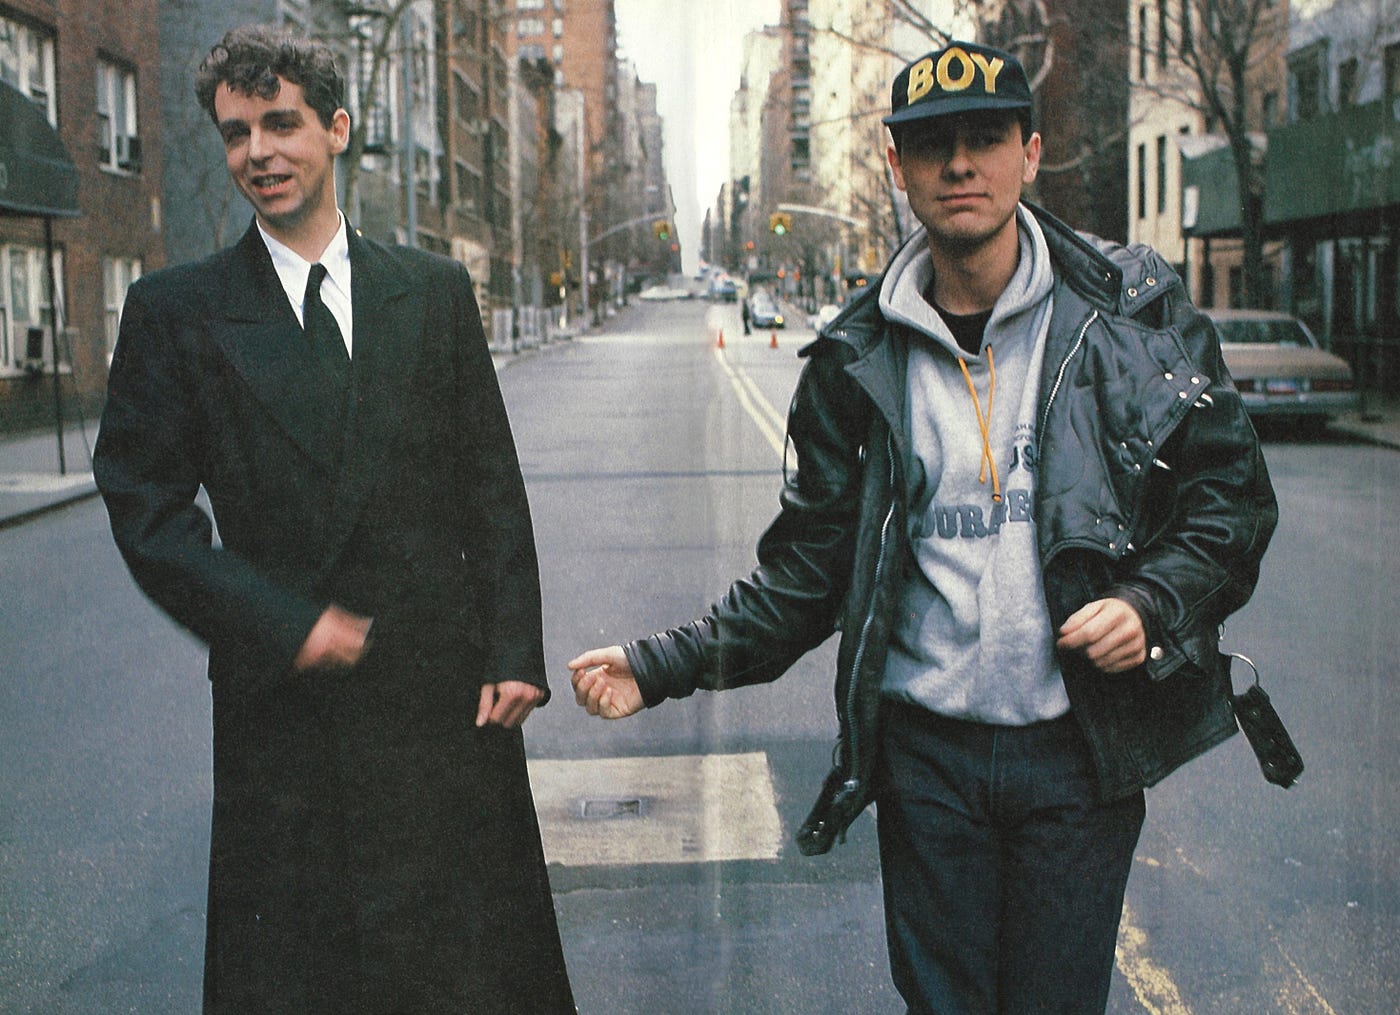 Remembering The AIDS Crisis With The Pet Shop Boys, by Christoph Büscher, ArtMagazine